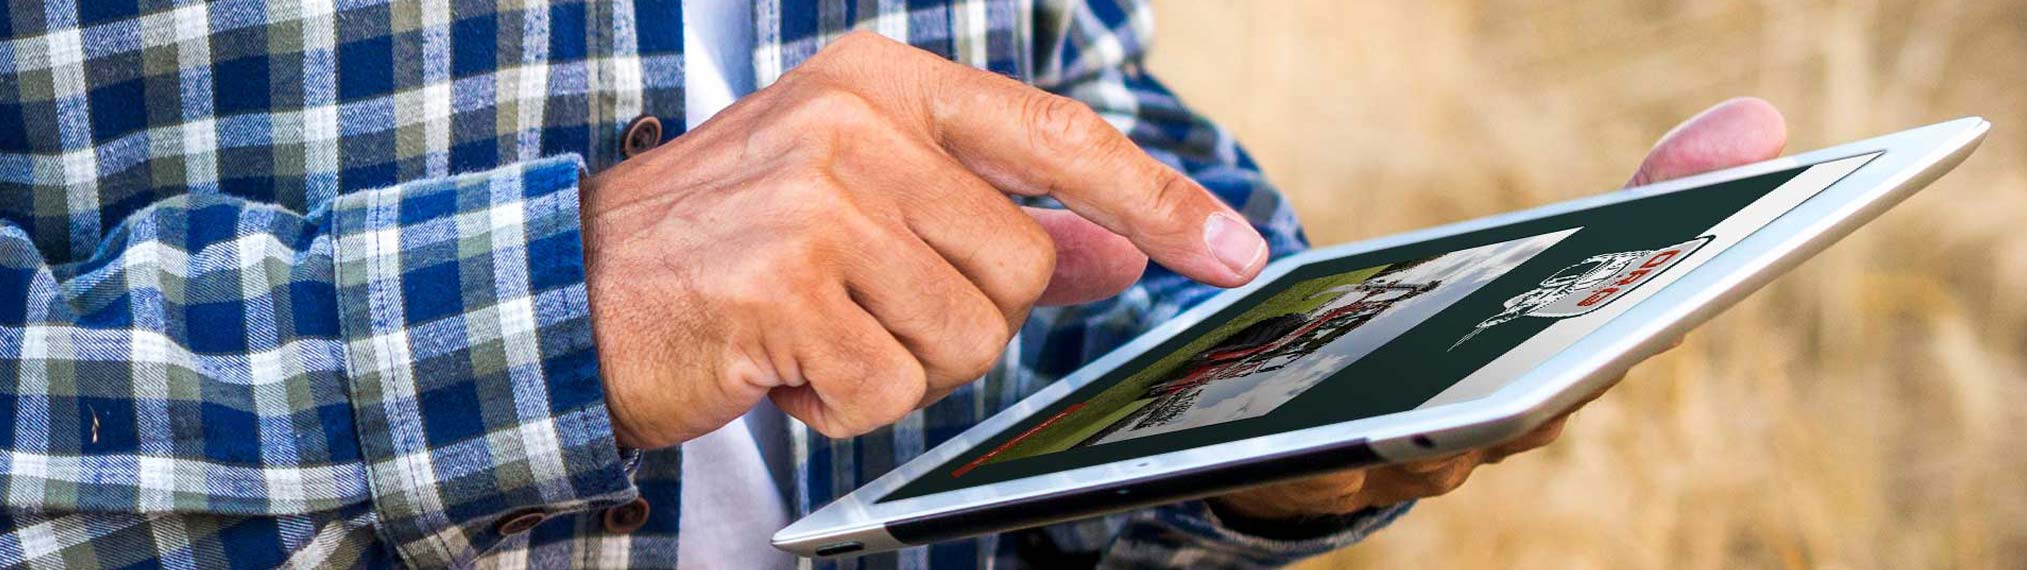 Landwirt Nahaufnahme Hand tippt auf iPad